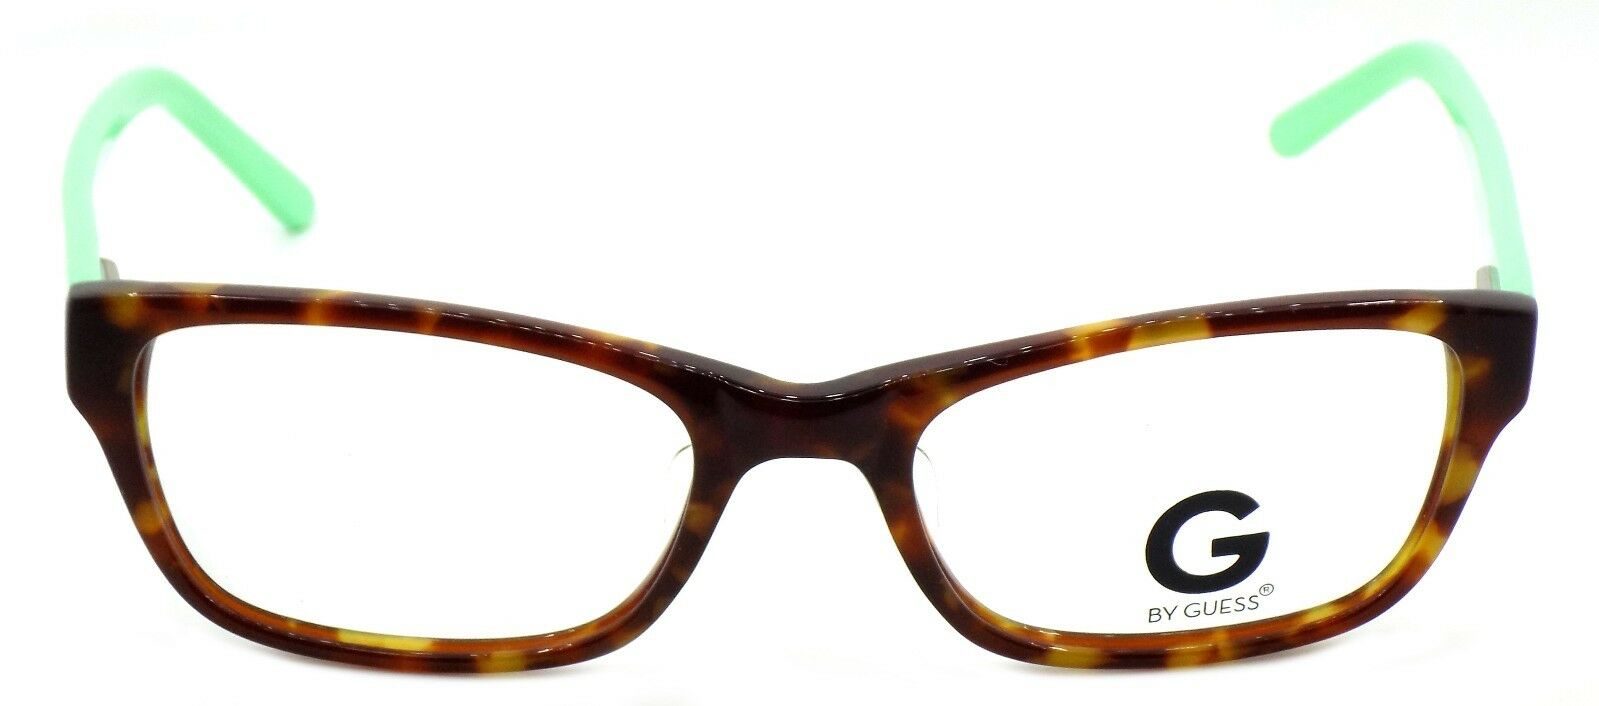 2-G by Guess GGA105 TOGRN Women's ASIAN FIT Eyeglasses Frames 52-18-135 Tortoise-715583639027-IKSpecs